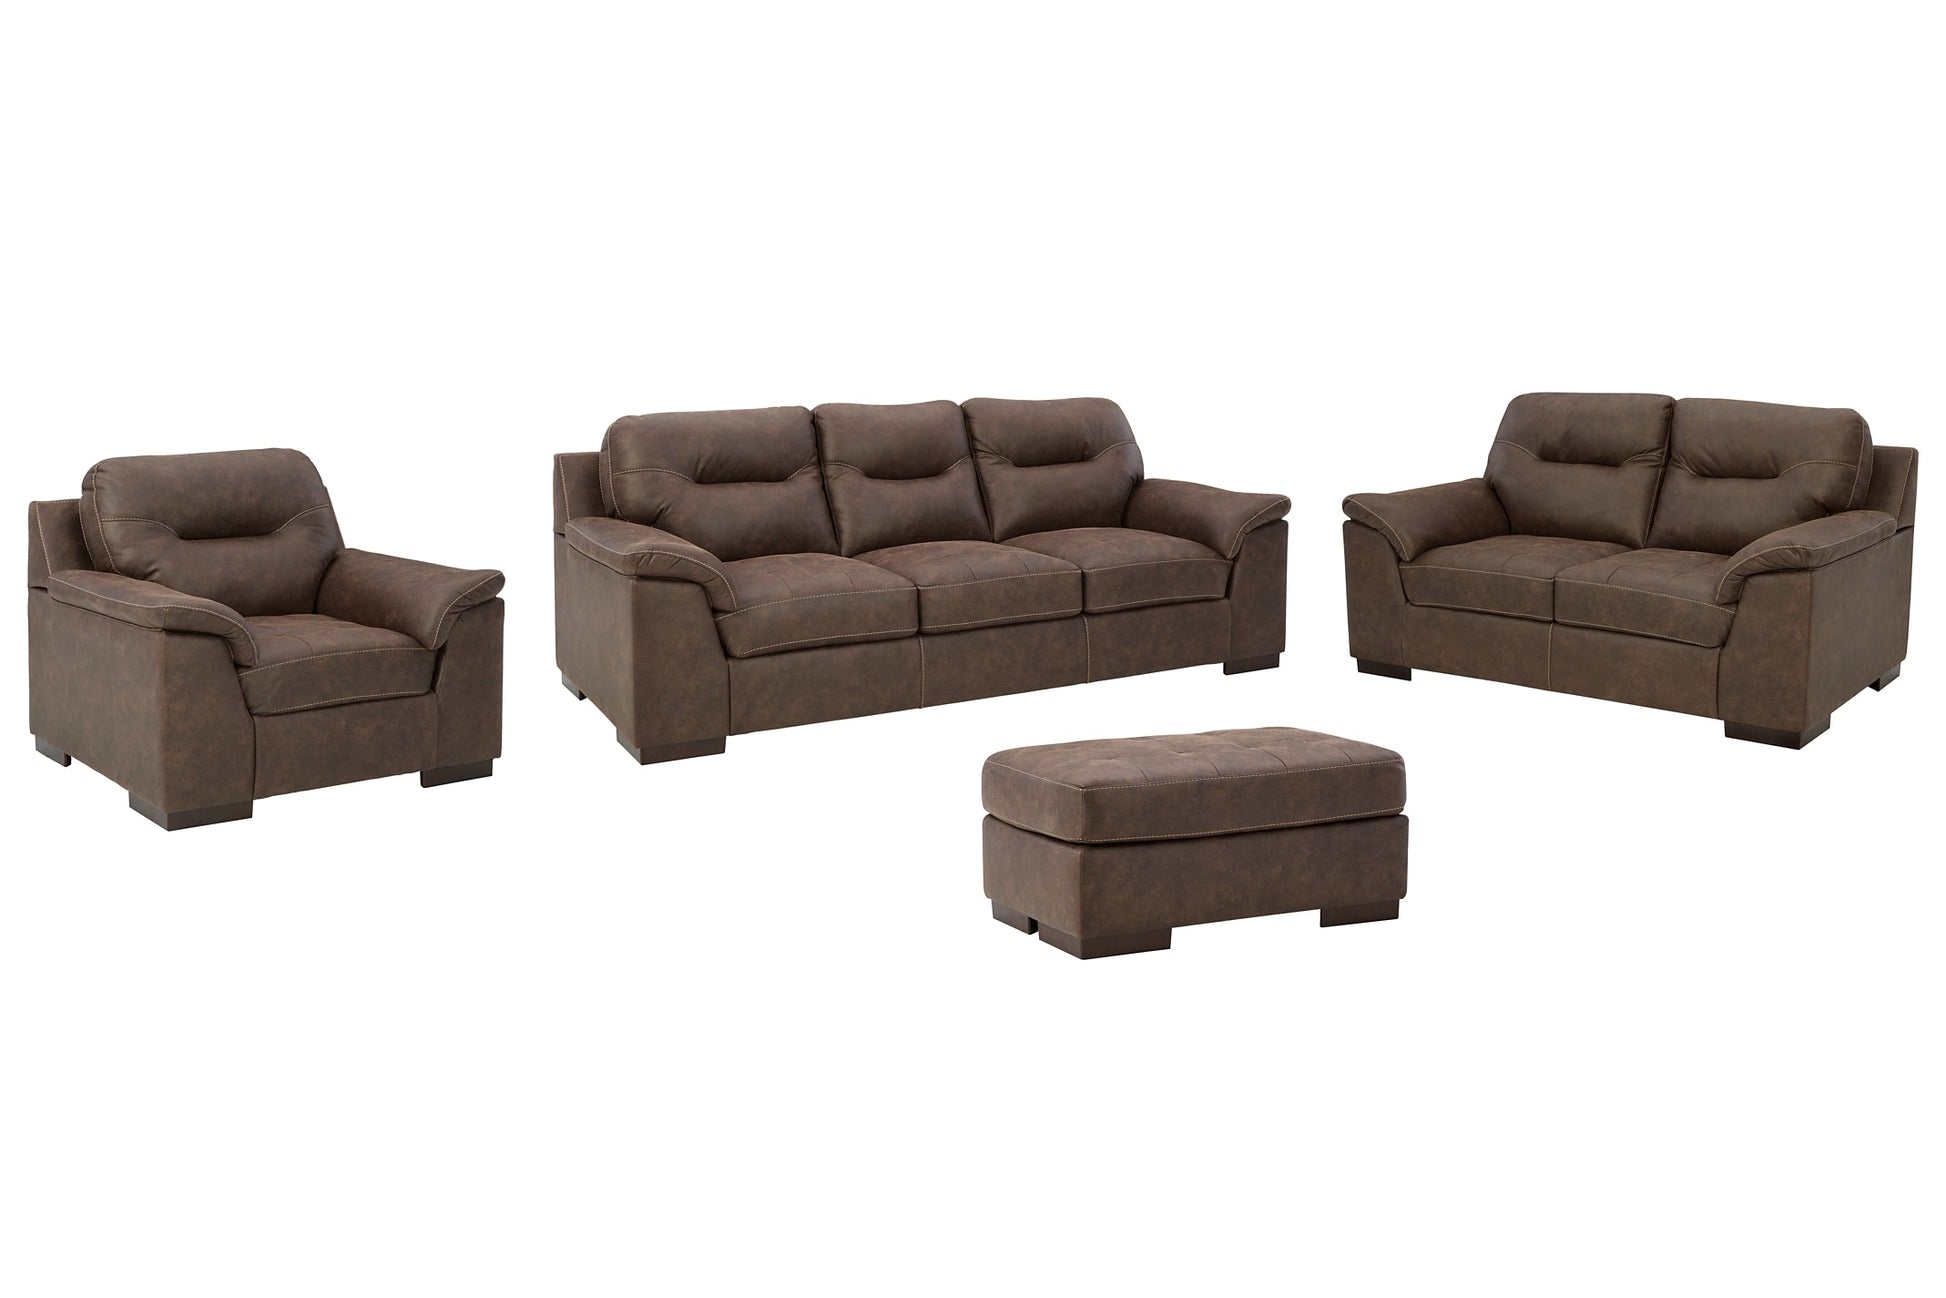 Maderla Sofa, Loveseat, Chair and Ottoman at Cloud 9 Mattress & Furniture furniture, home furnishing, home decor